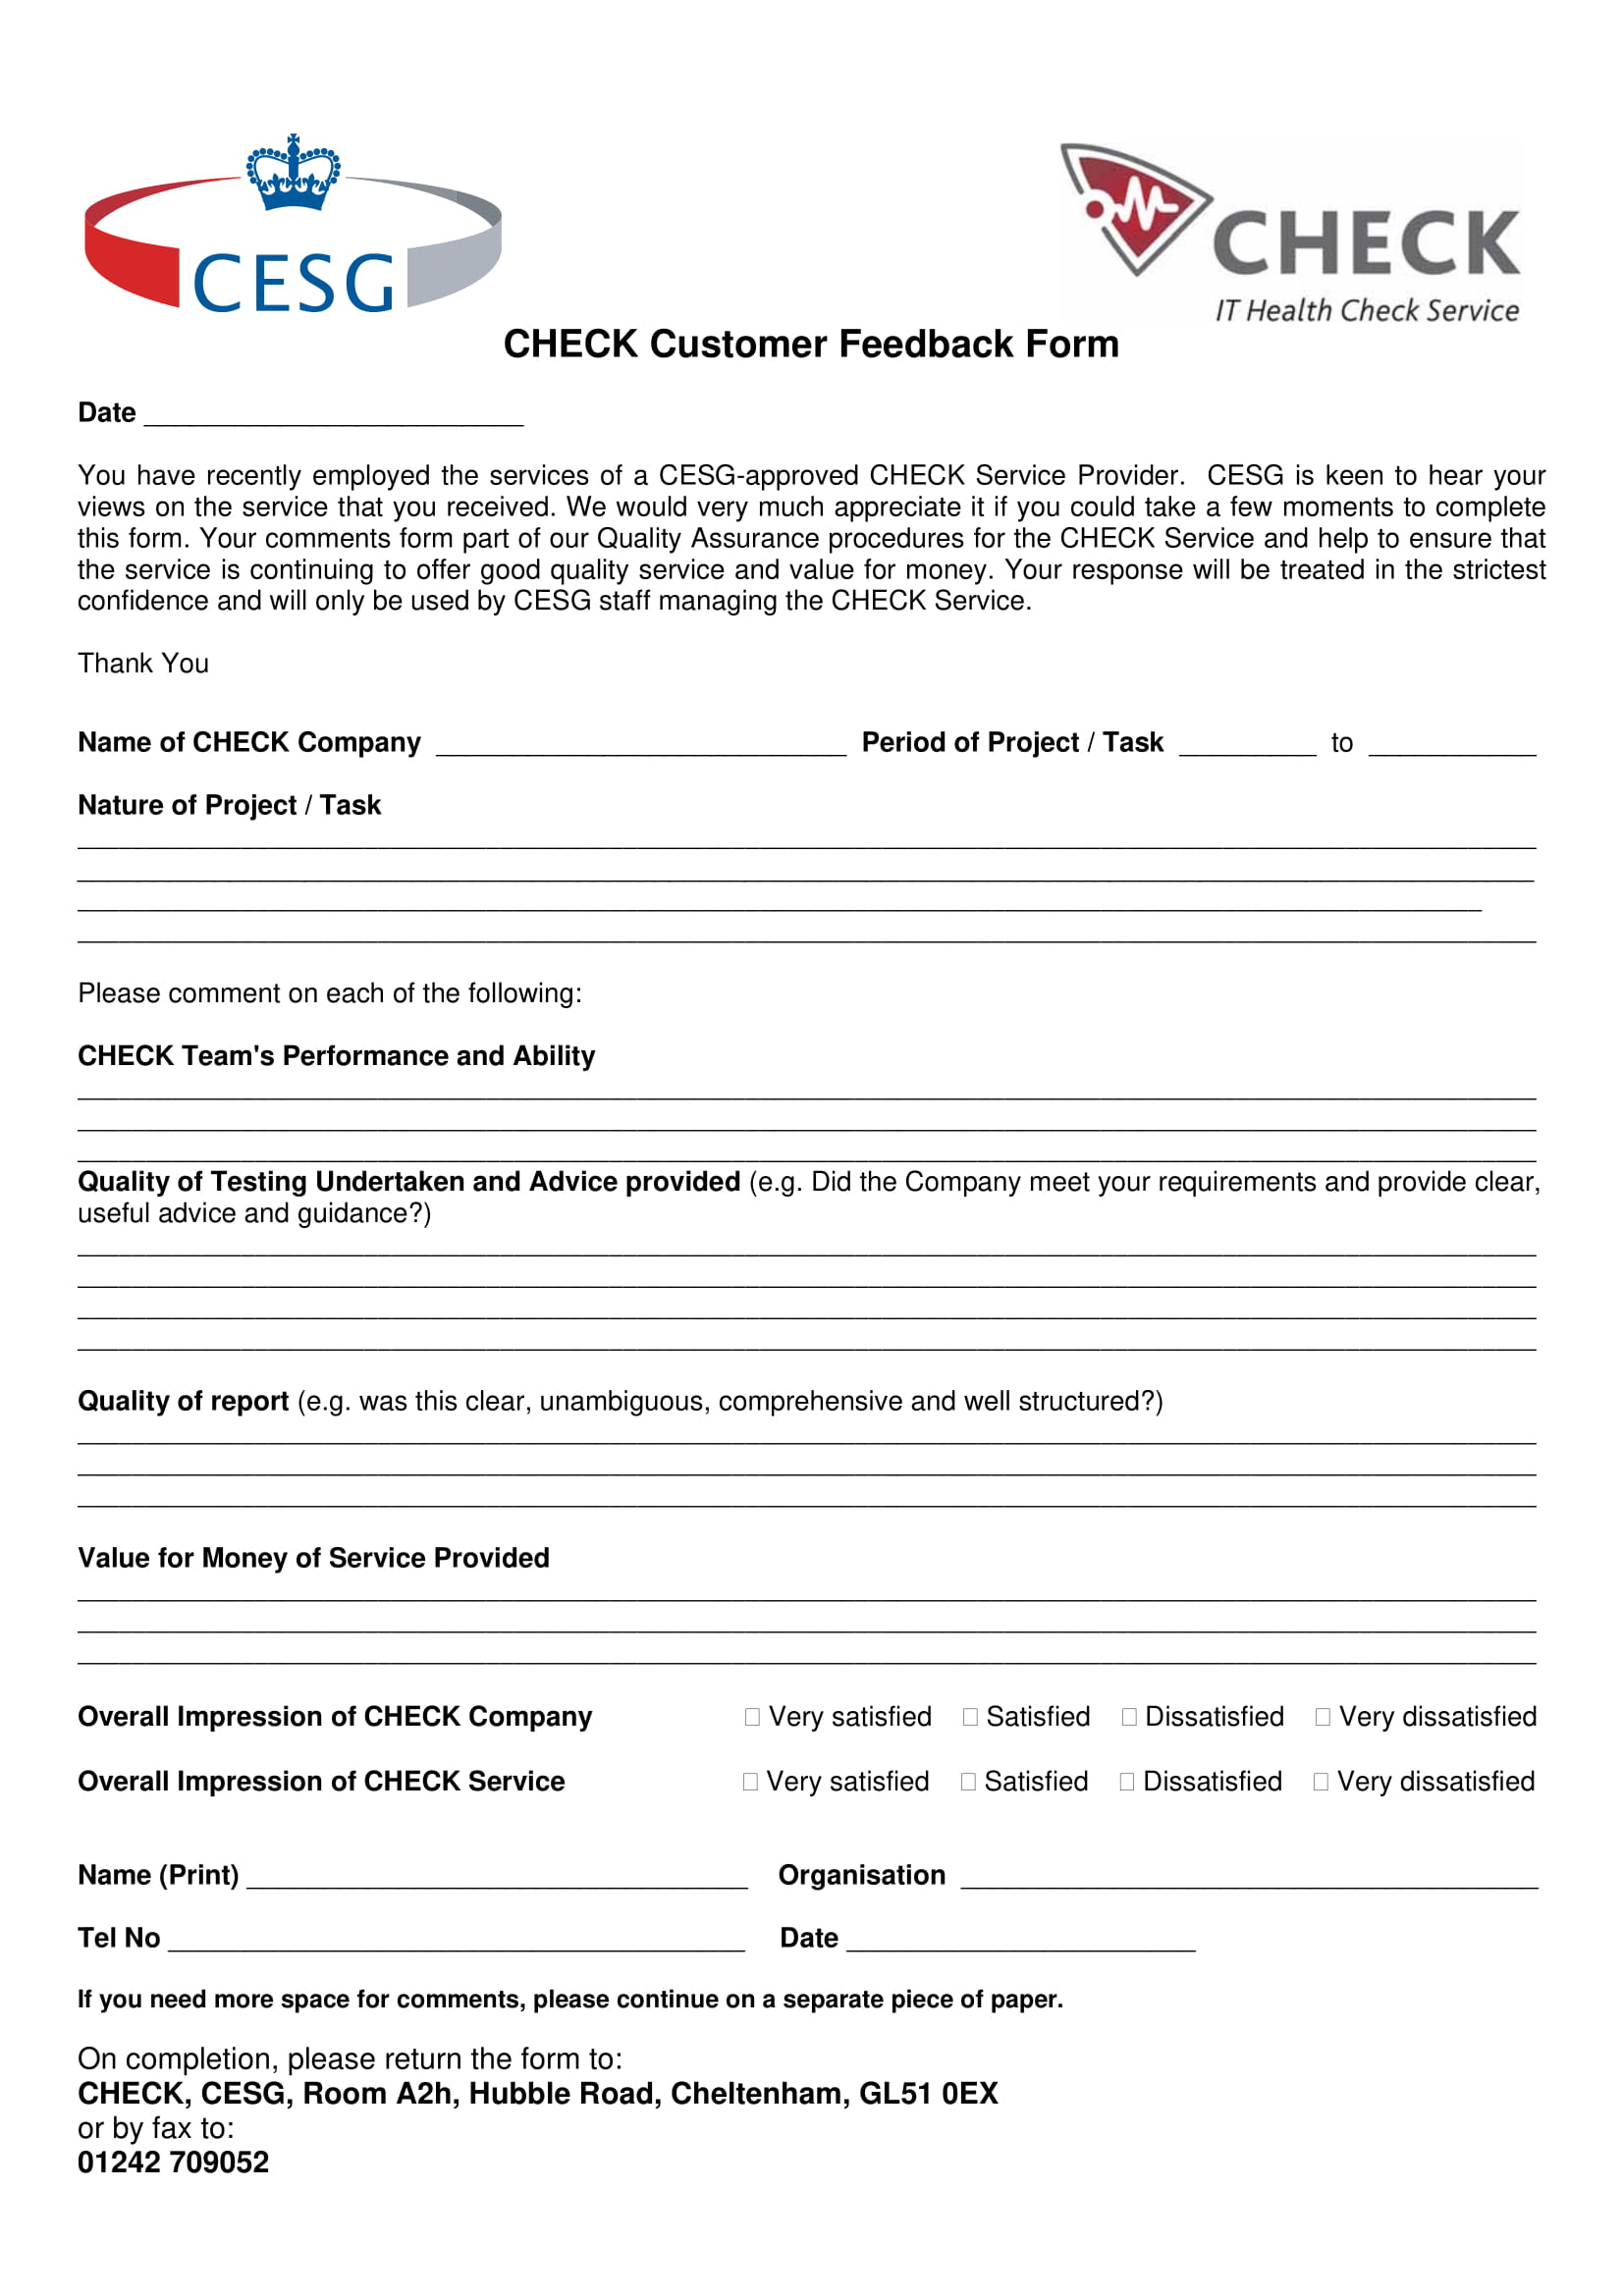 health check customer feedback form 1